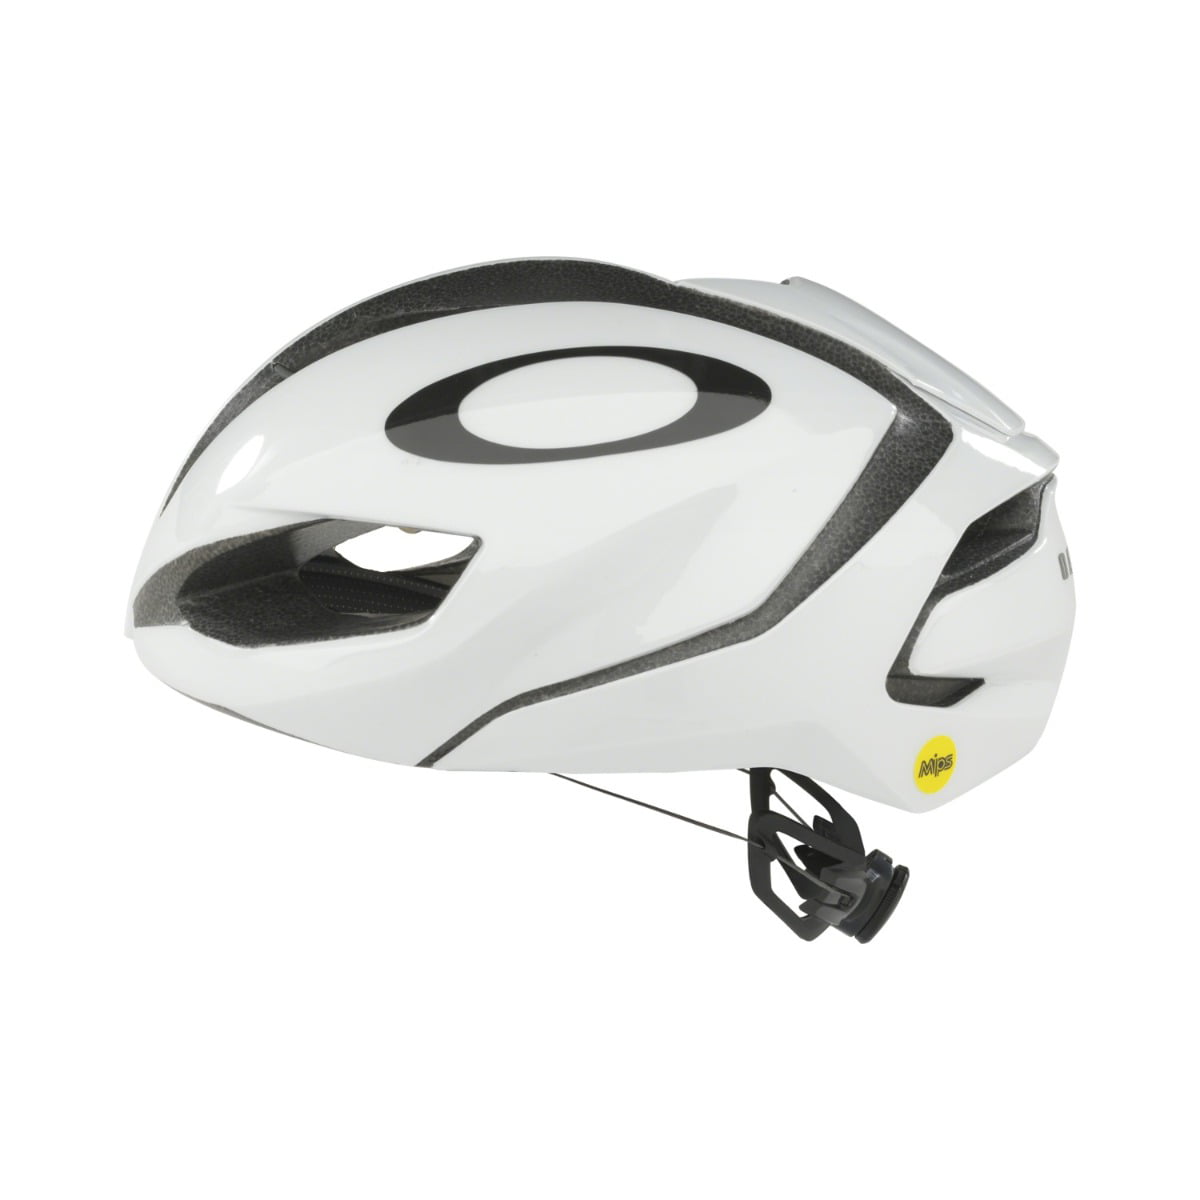 Oakley ARO5 Cycling Helmet - LG - White